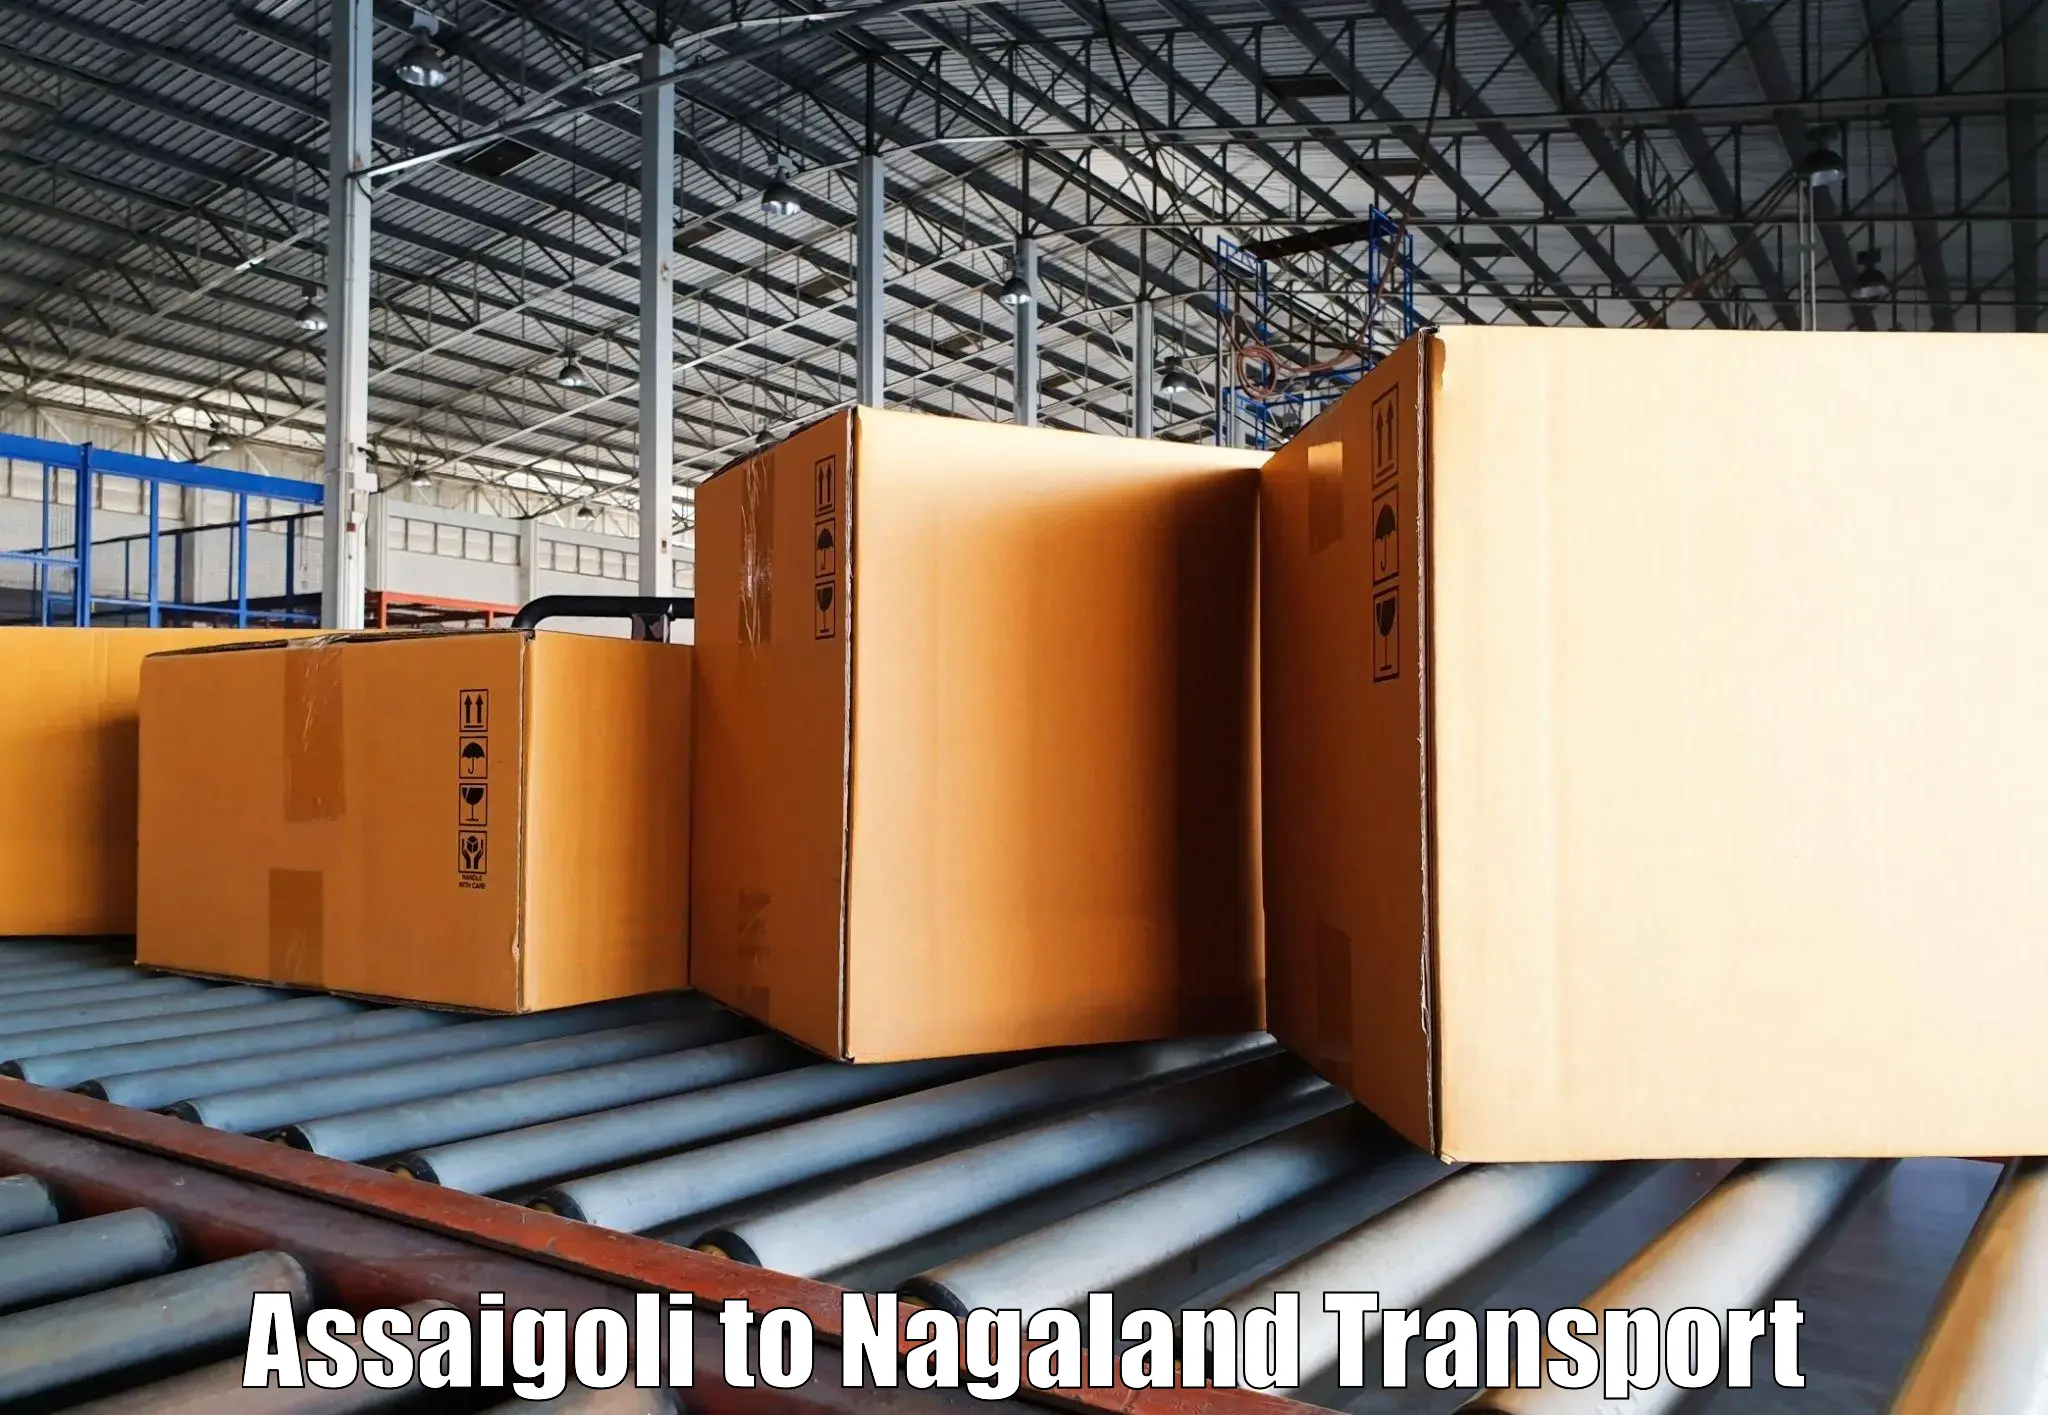 Door to door transport services Assaigoli to Nagaland